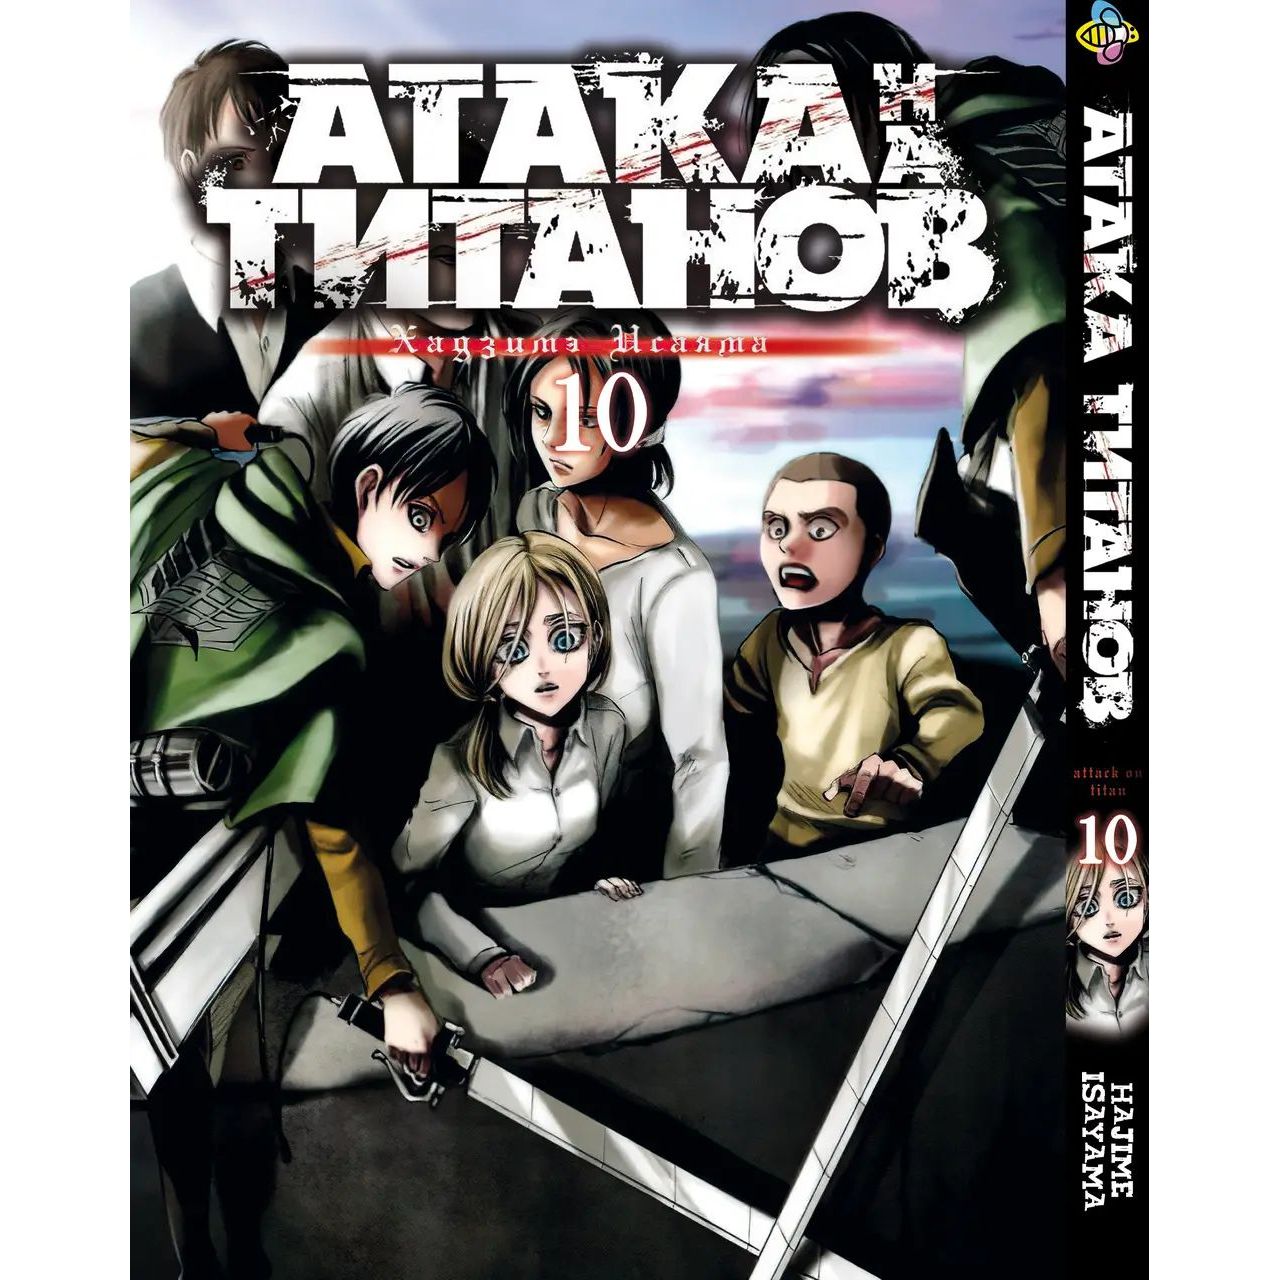 Комплект Манги Bee's Print Attack on Titan Атака Титанов BP ATSET 02 том 1-34 - Хадзимэ Исаяма (1754239195.0) - фото 10